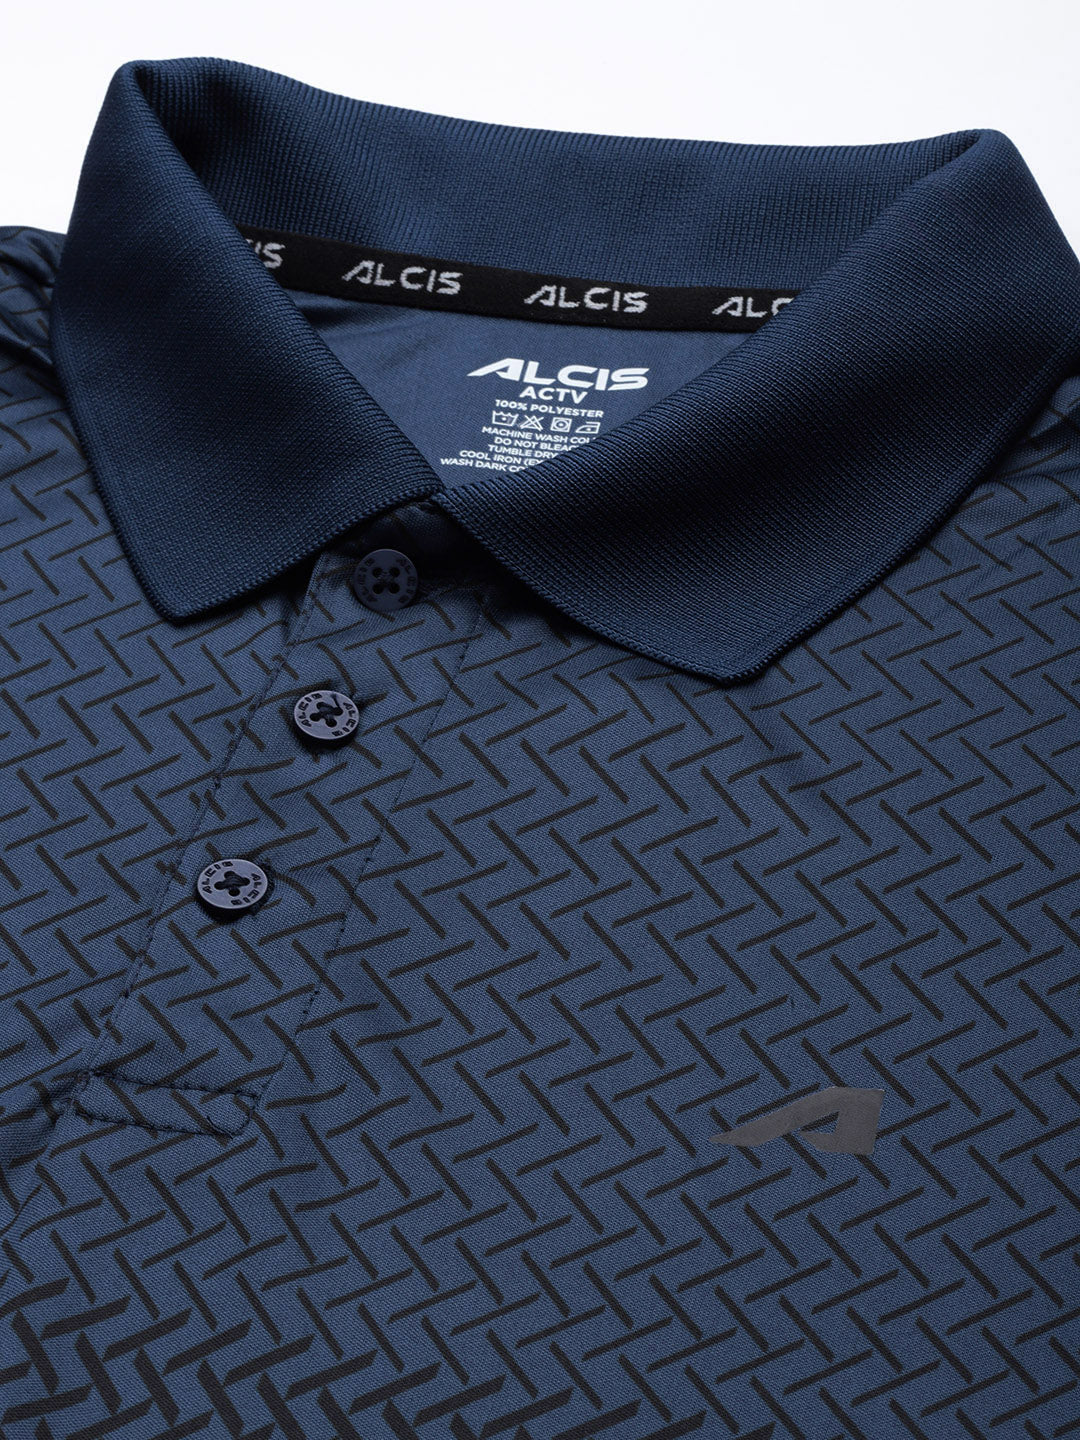 Alcis Men Navy Blue Black Printed Polo Collar Slim Fit Running T-shirt